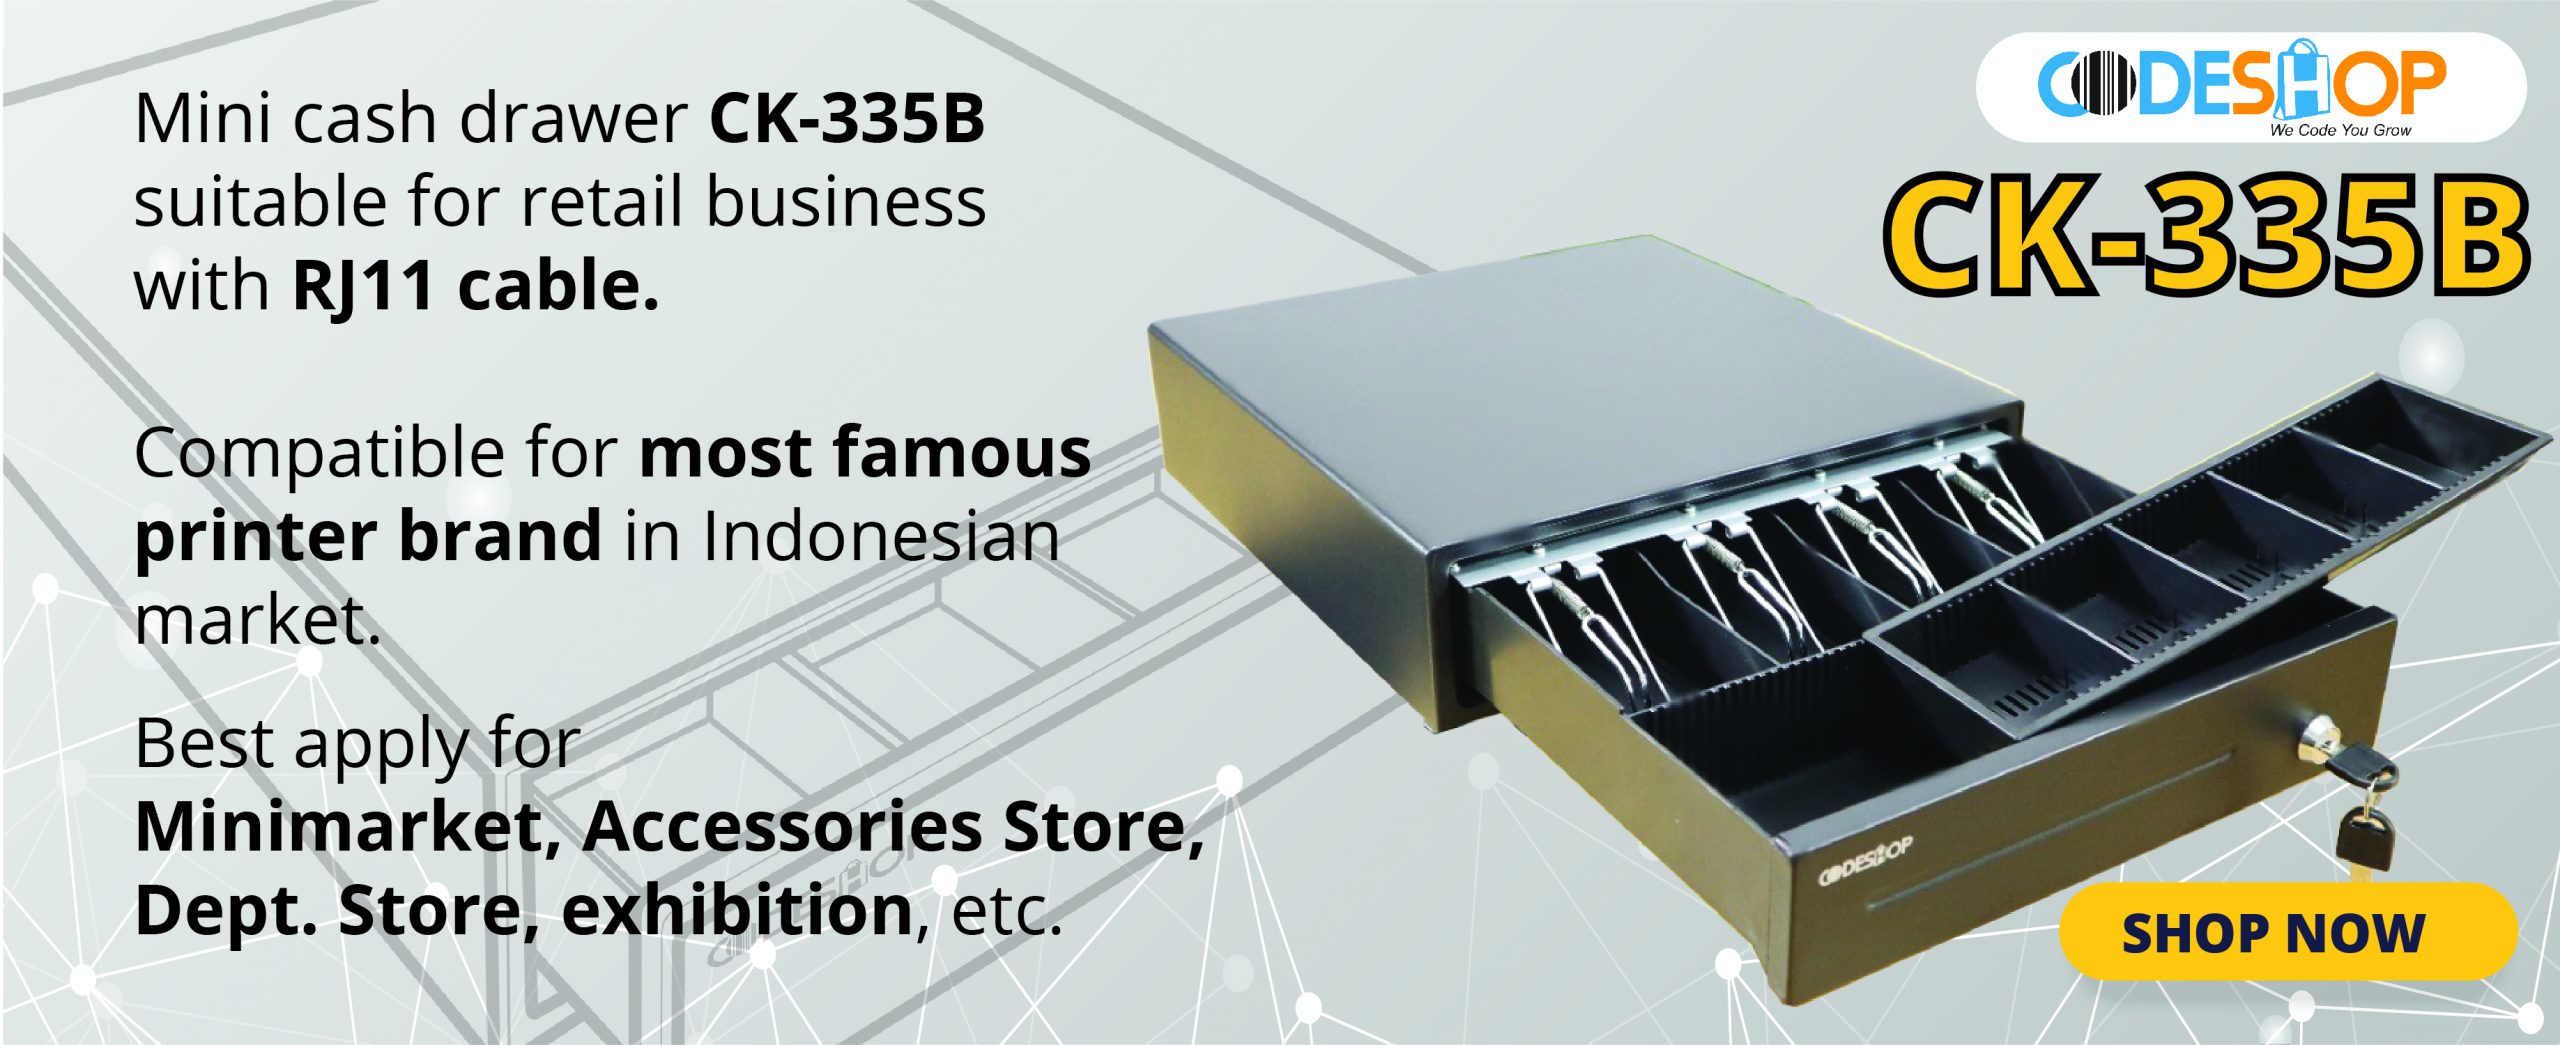 cash-drawer-mini-codeshop-ck335b